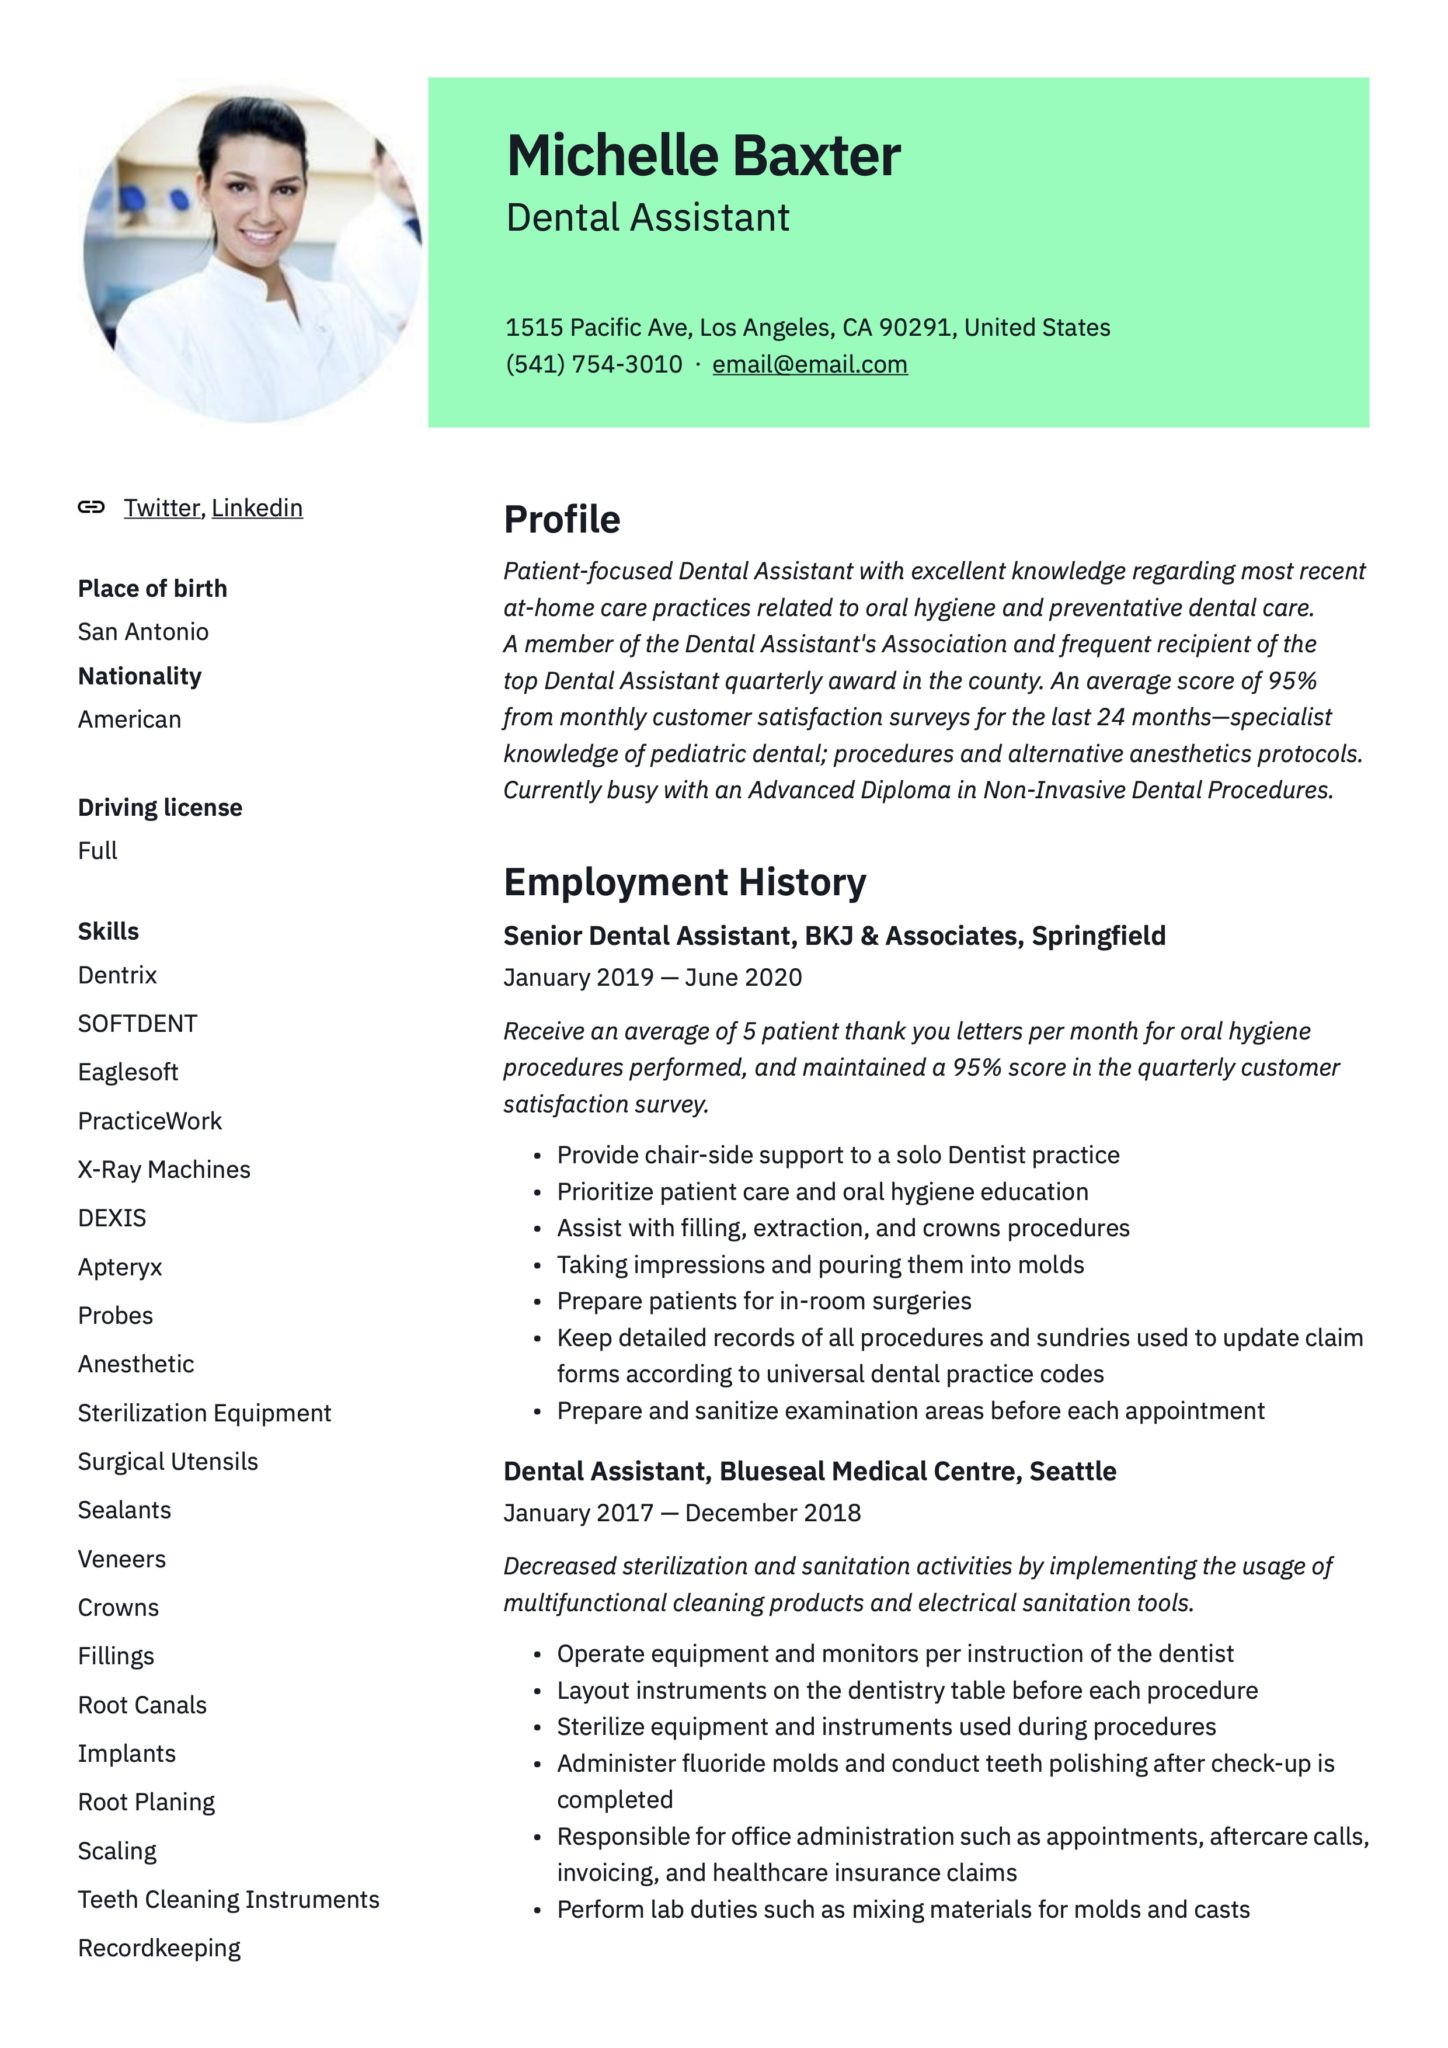 Dental assistant Level 2 Resume Sample 17 Dental assistant Resumes & Writing Guide 2022